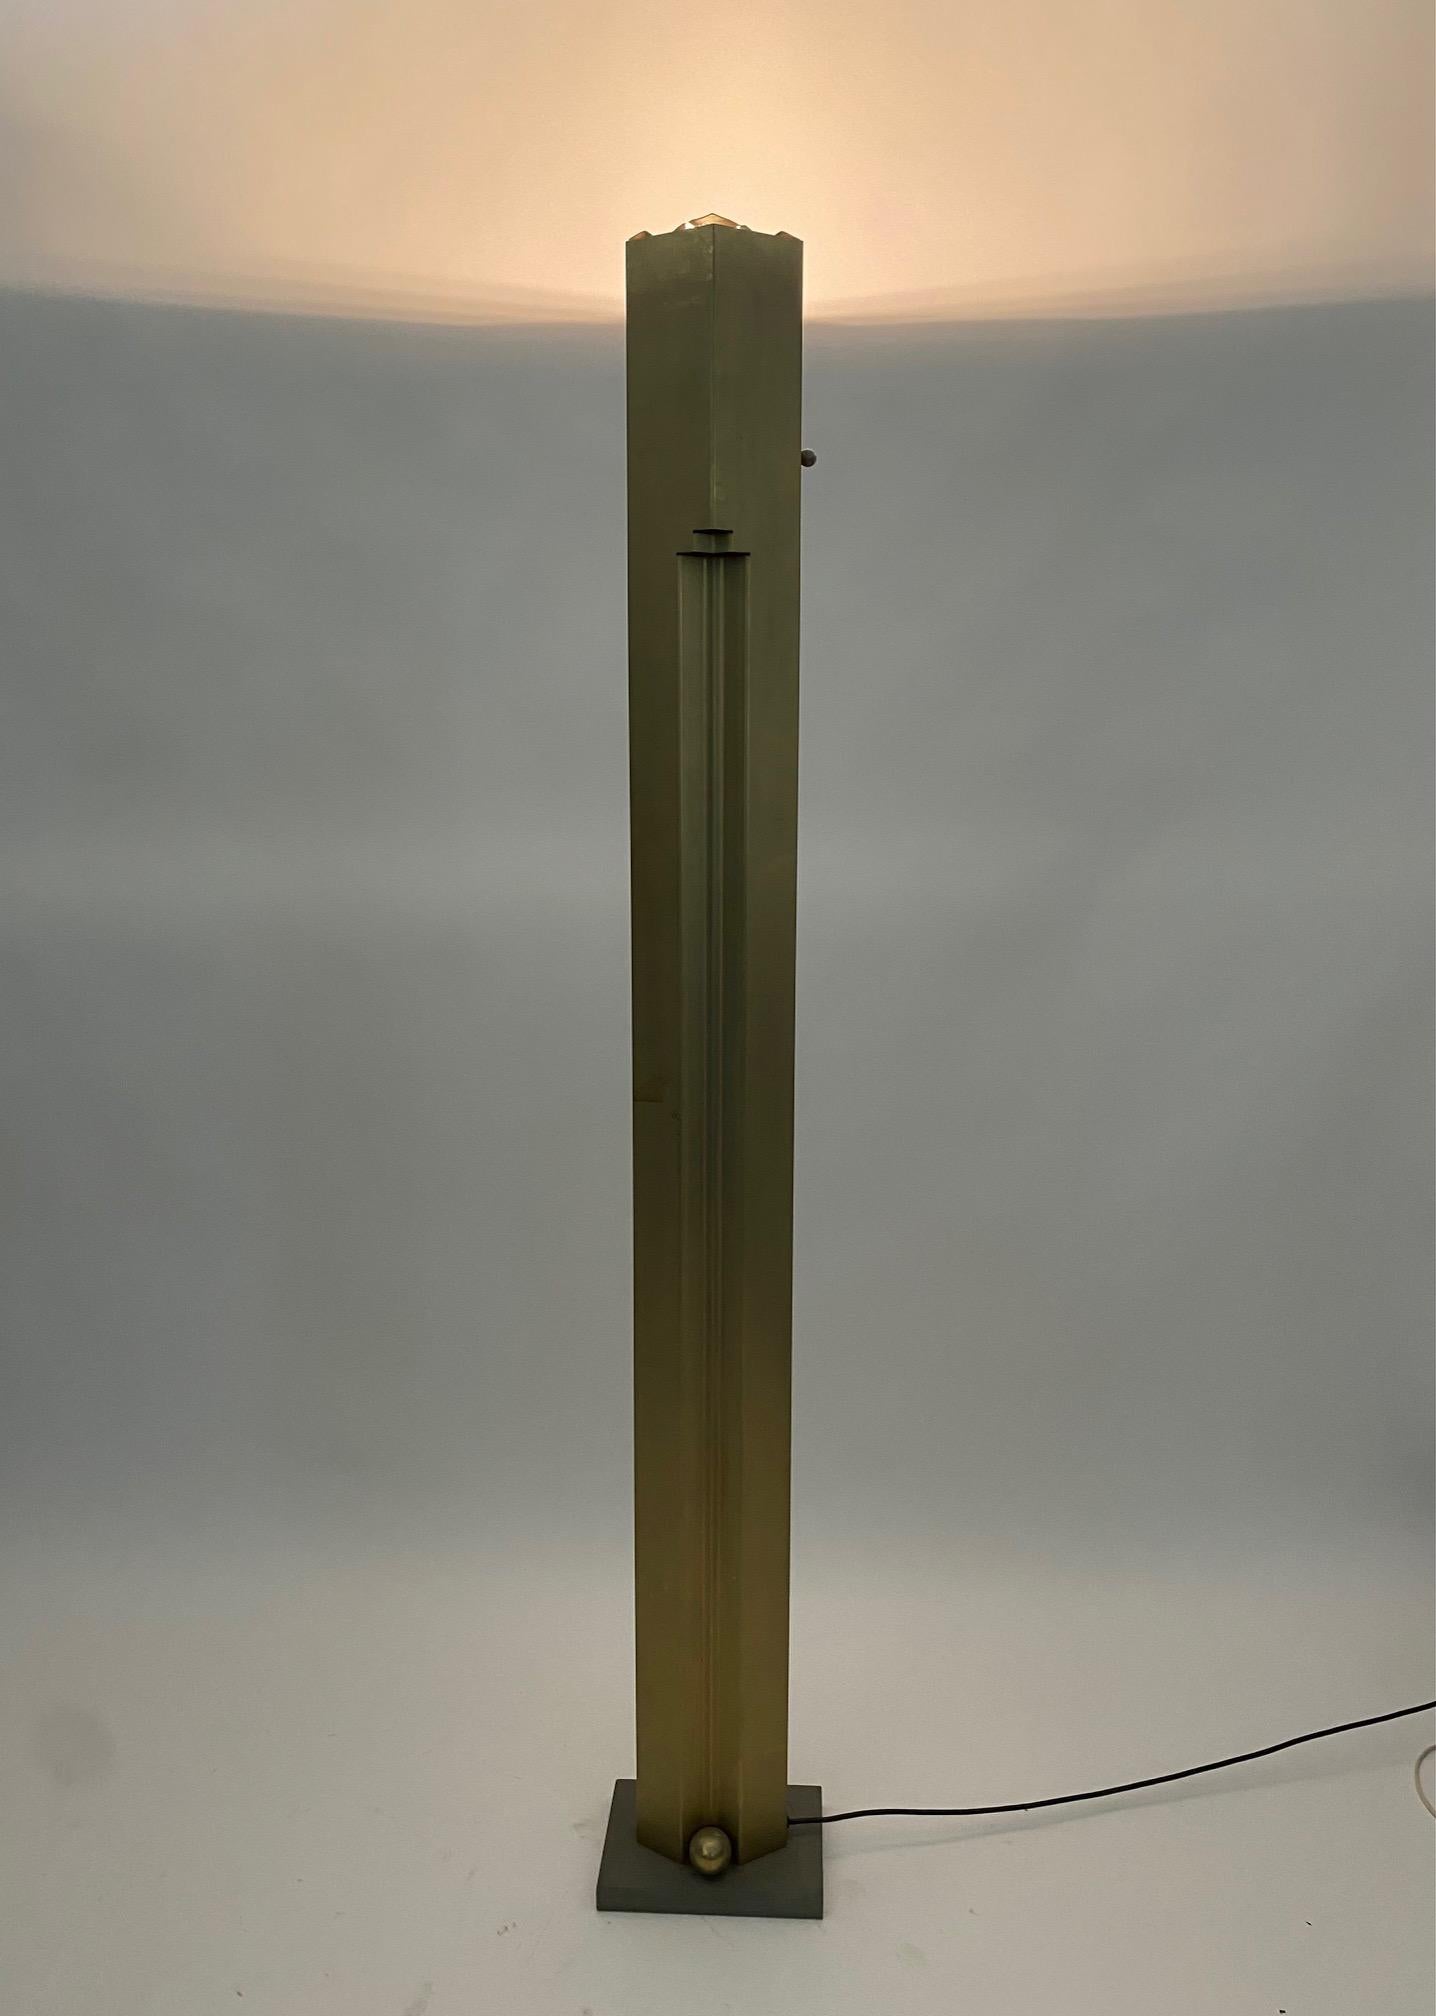 Italian Totem Floor Lamp by Kazuhide Takahama for Sirrah, Italy 1982 - Old version For Sale